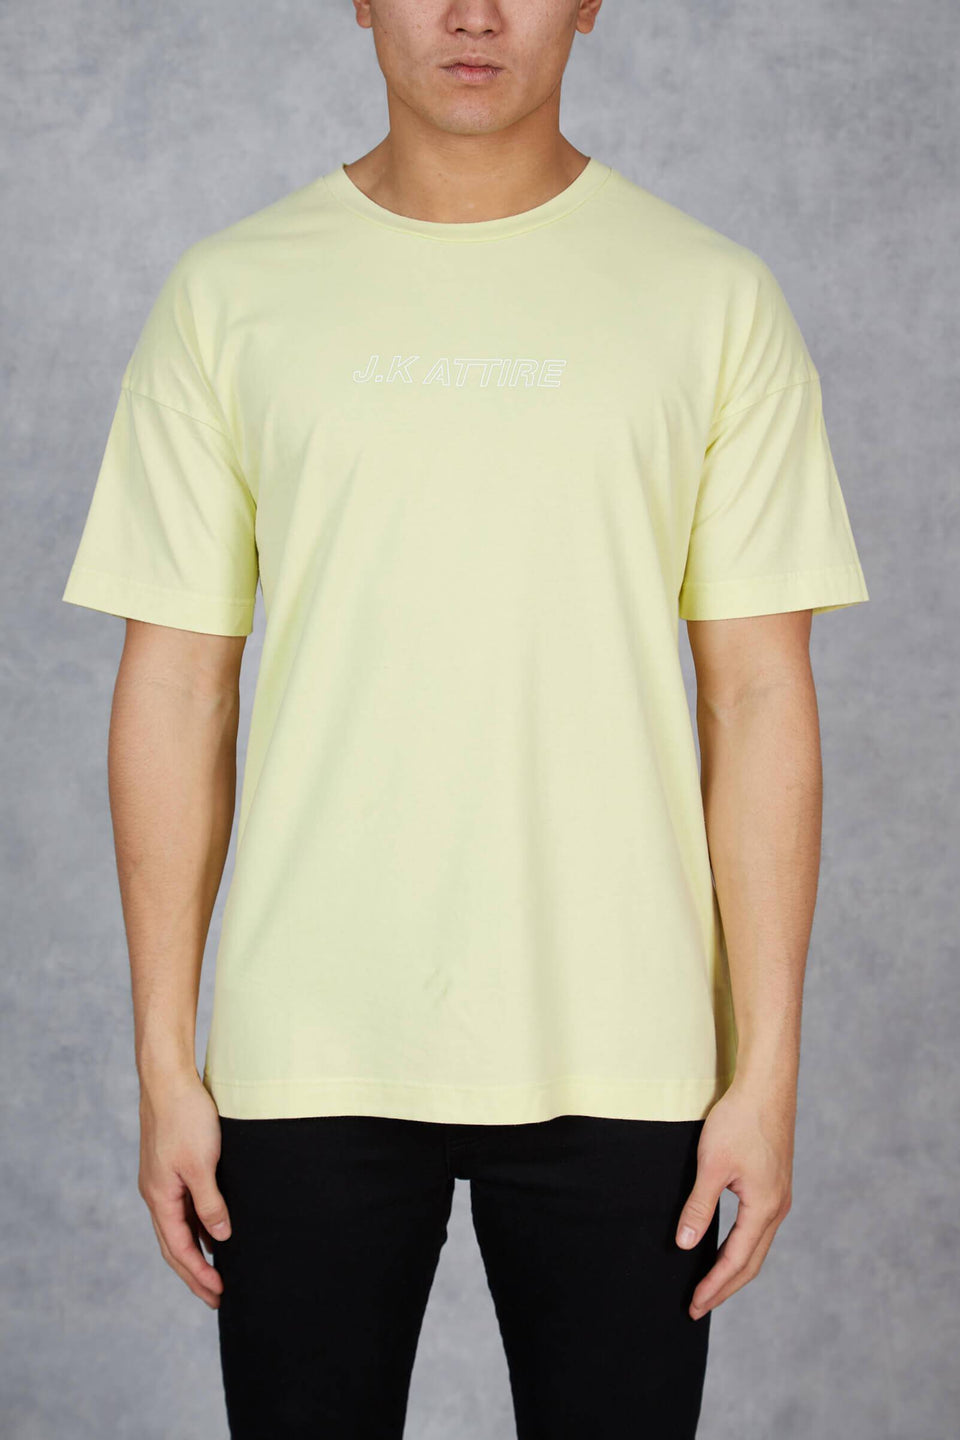 Scorpion Acid Wash T-Shirt - Neon Yellow